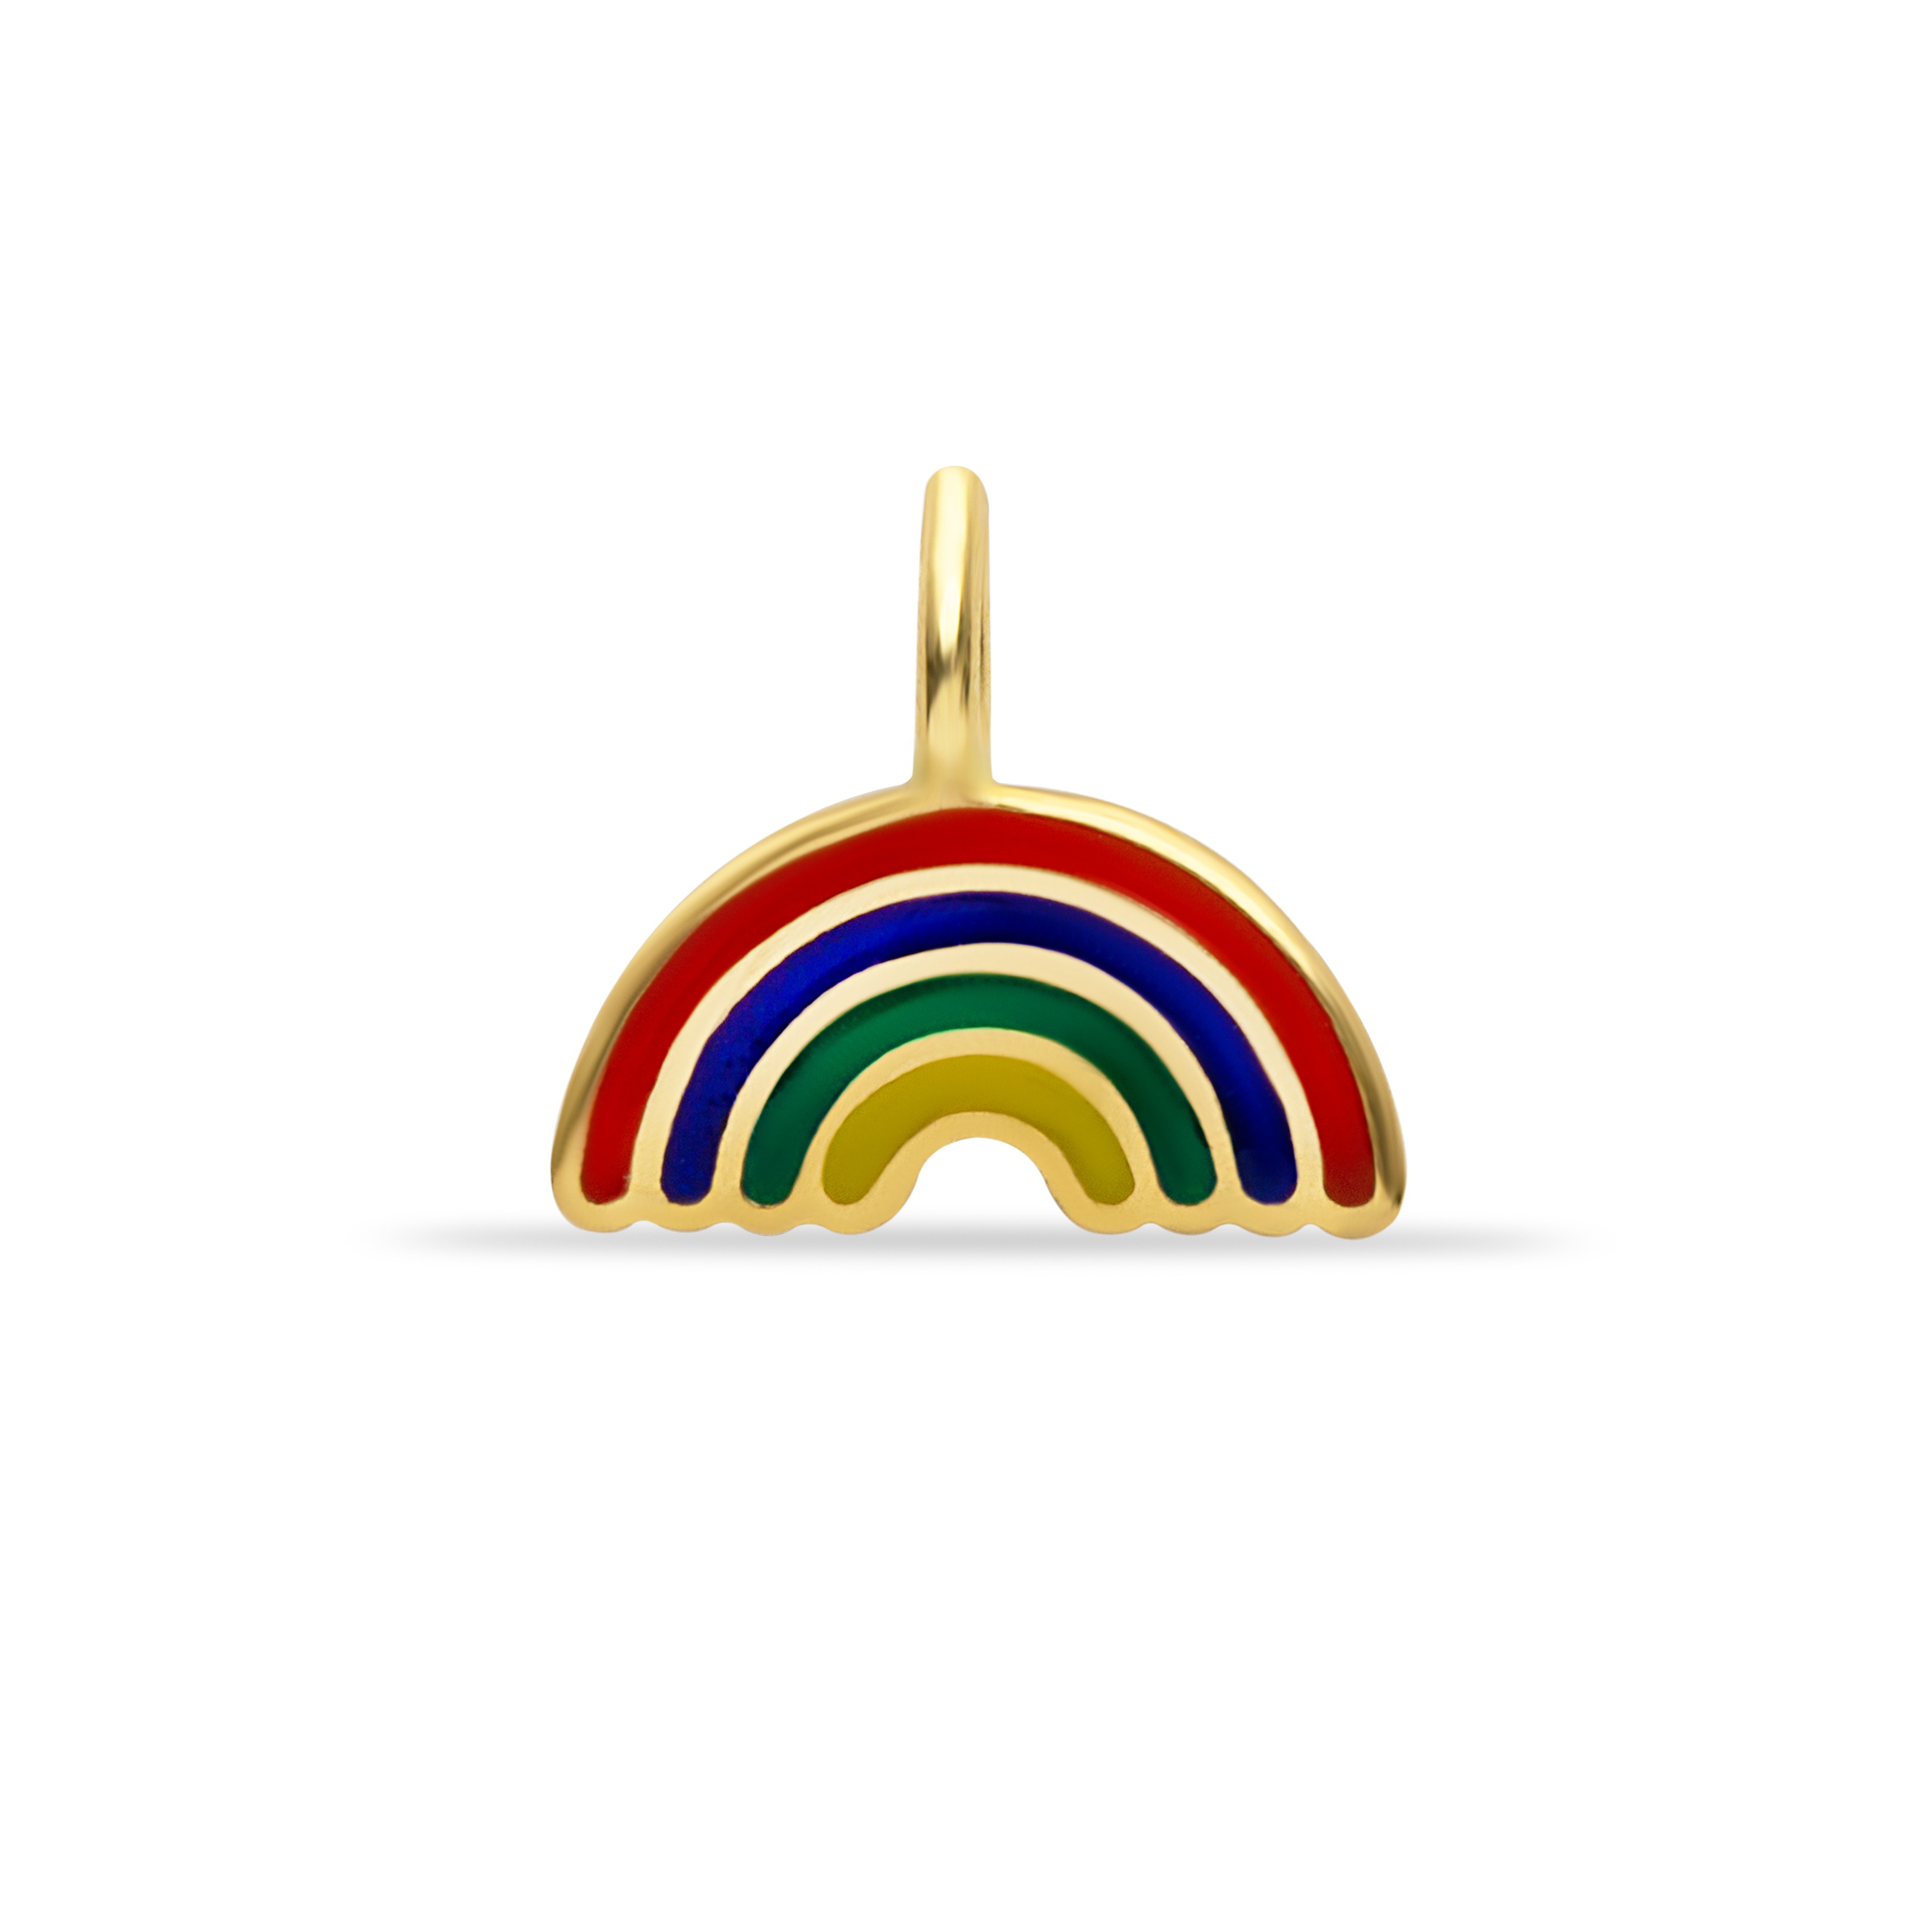 14 Carat Gold Colored Rainbow Pendant